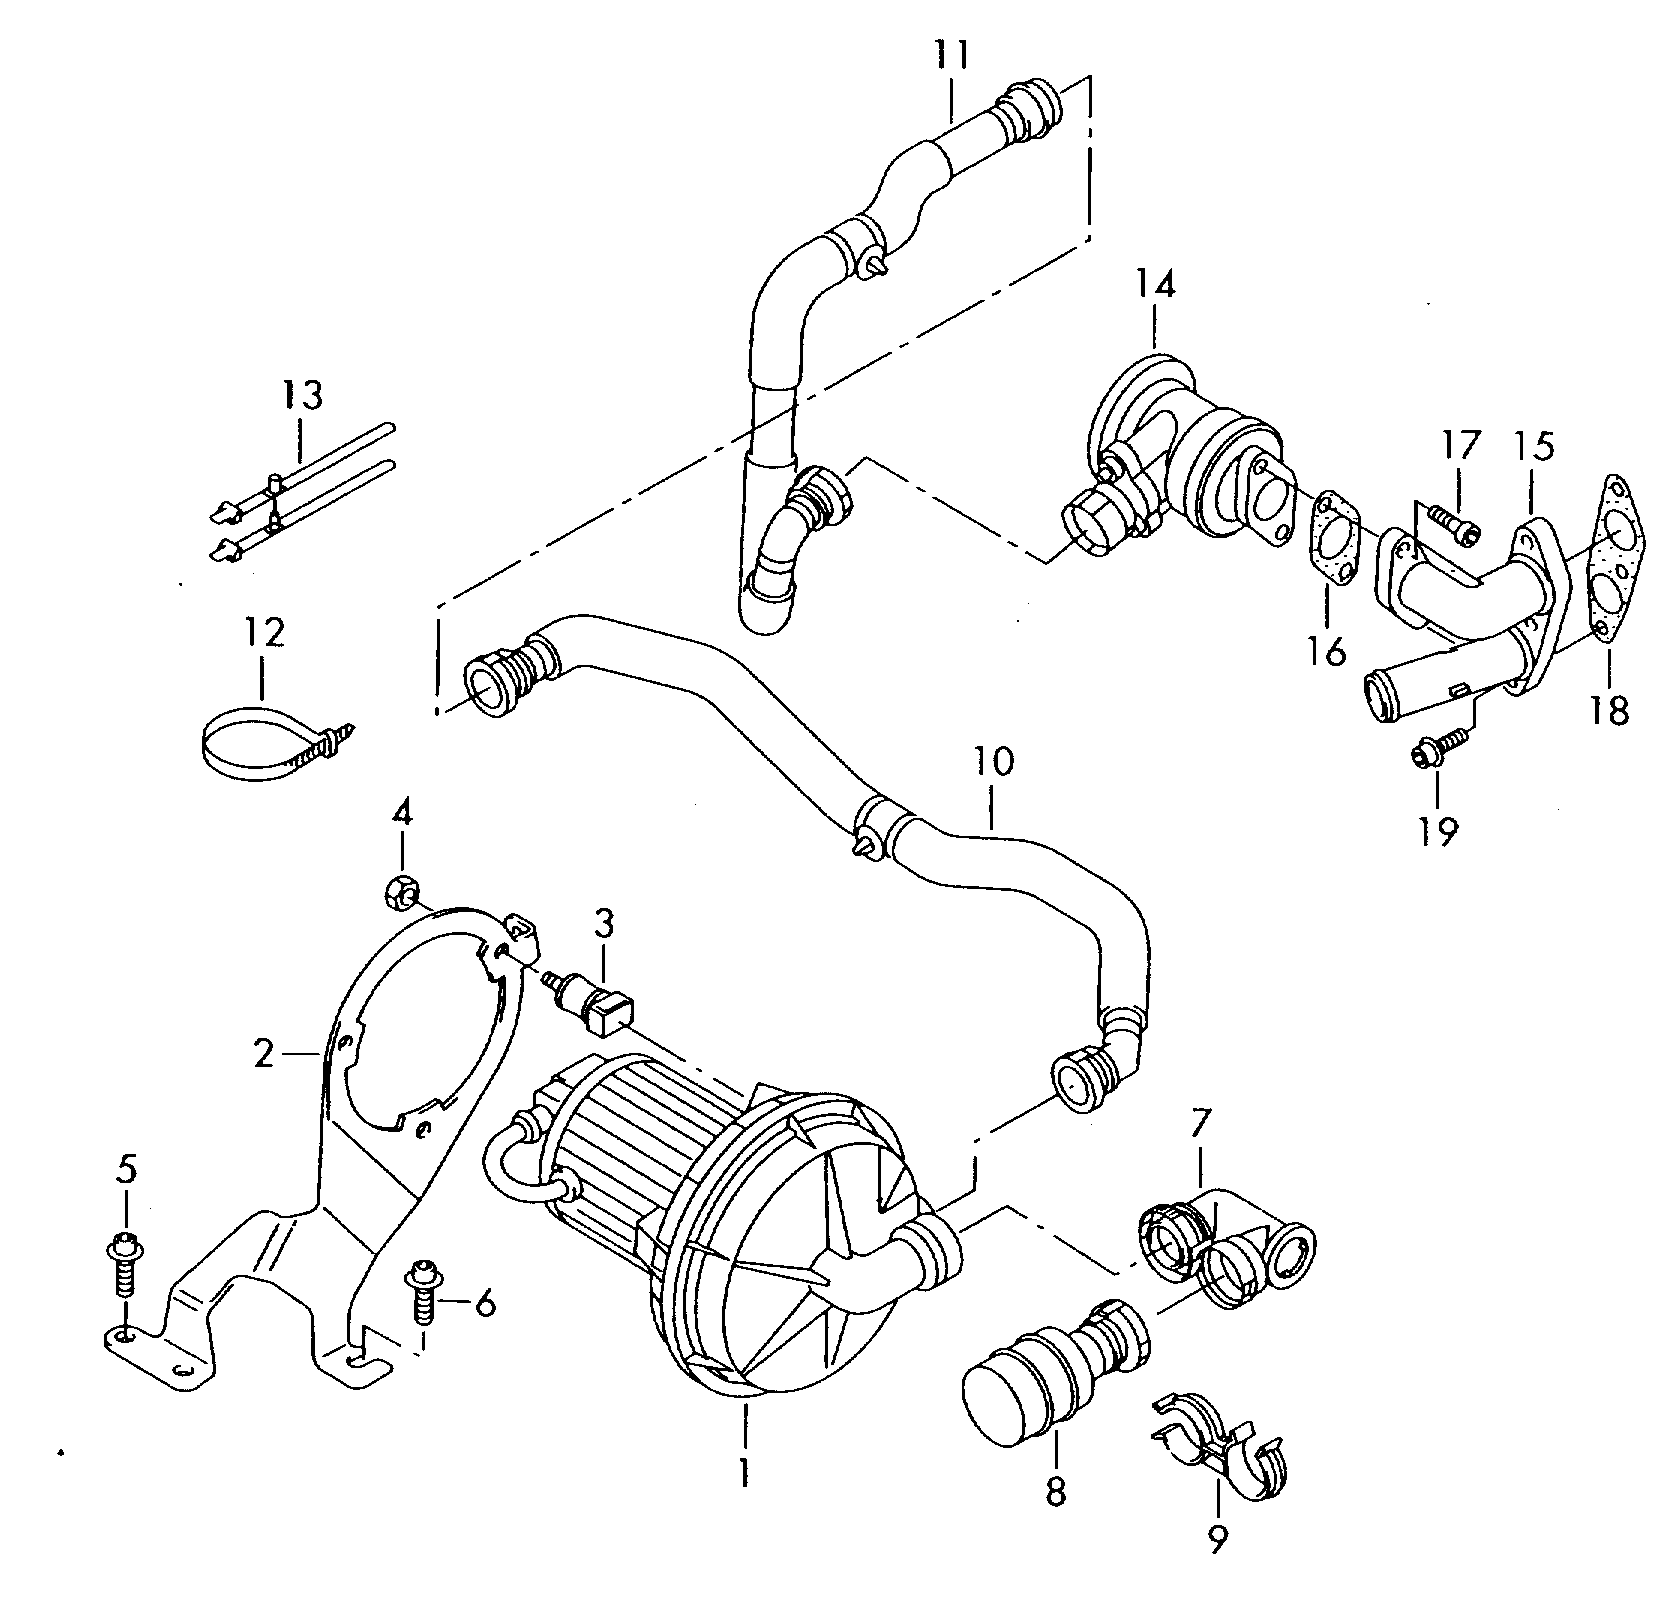 secondary air pump - Golf/Variant/4Motion(GOLF)  